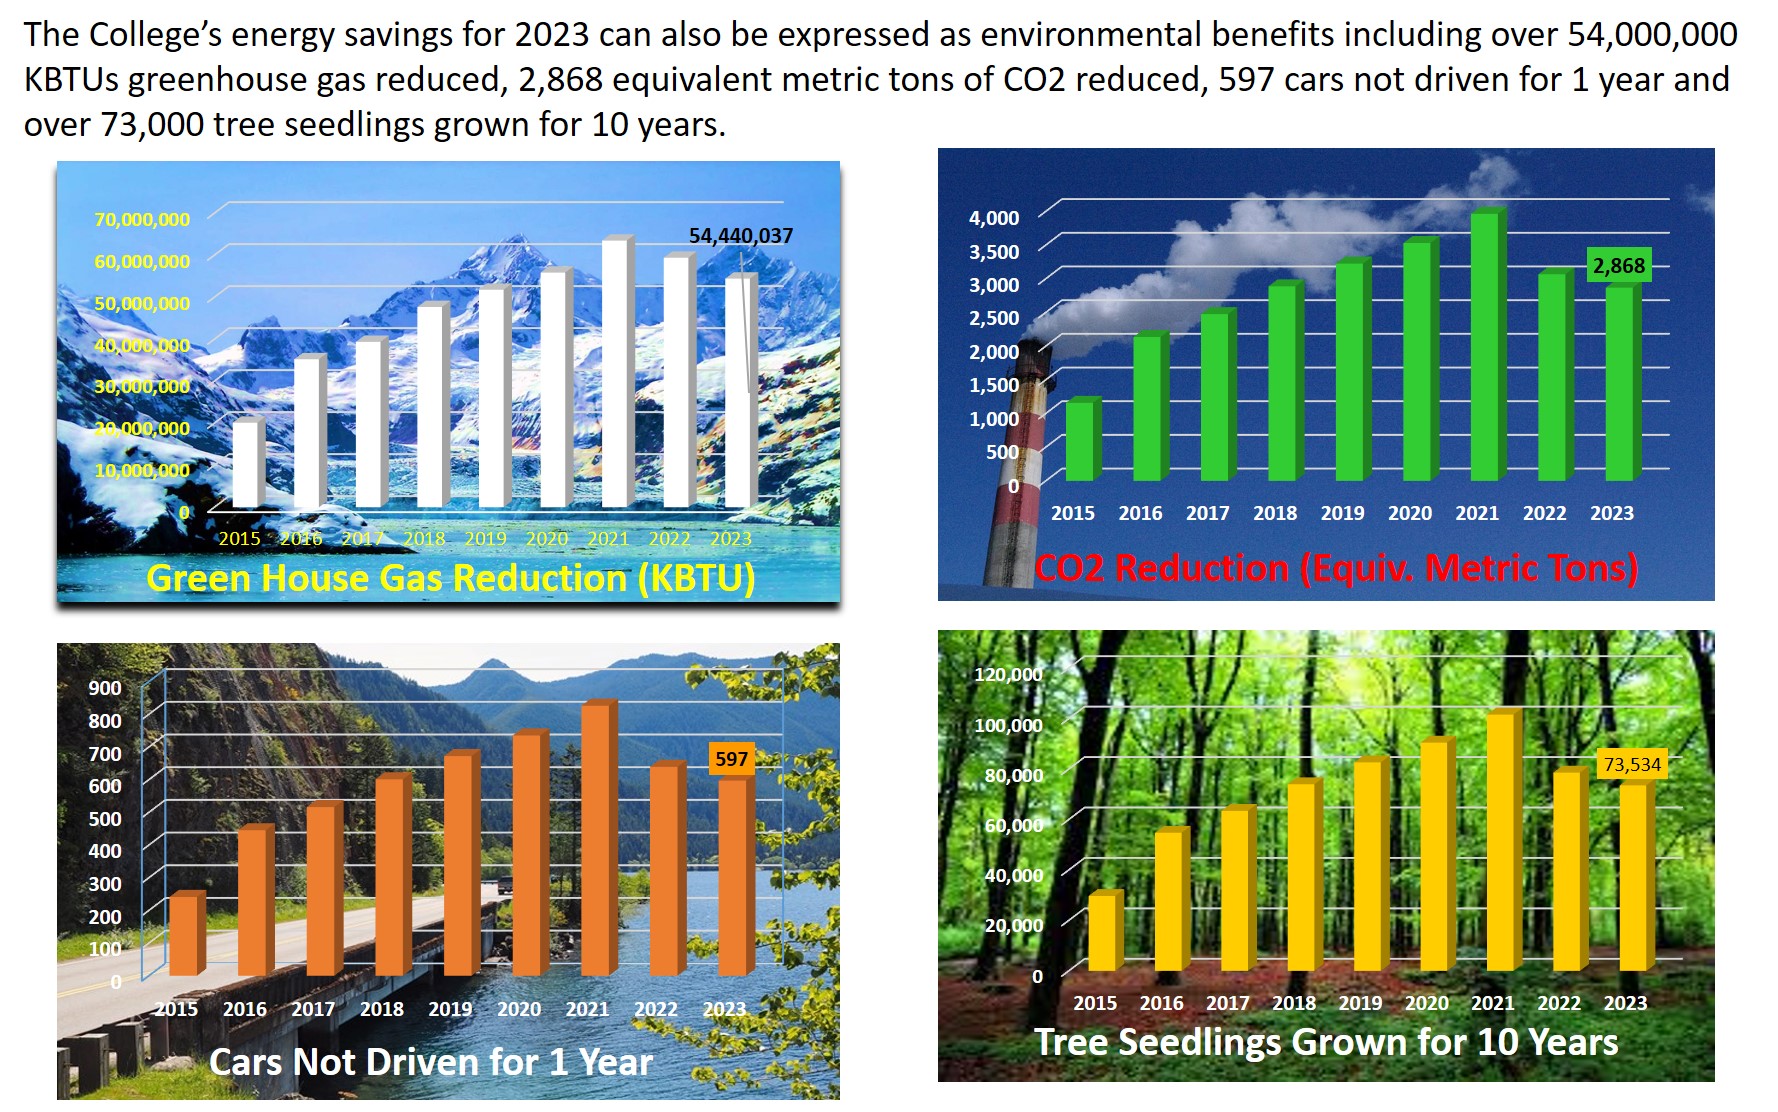 Energy Savings Benefits 2023